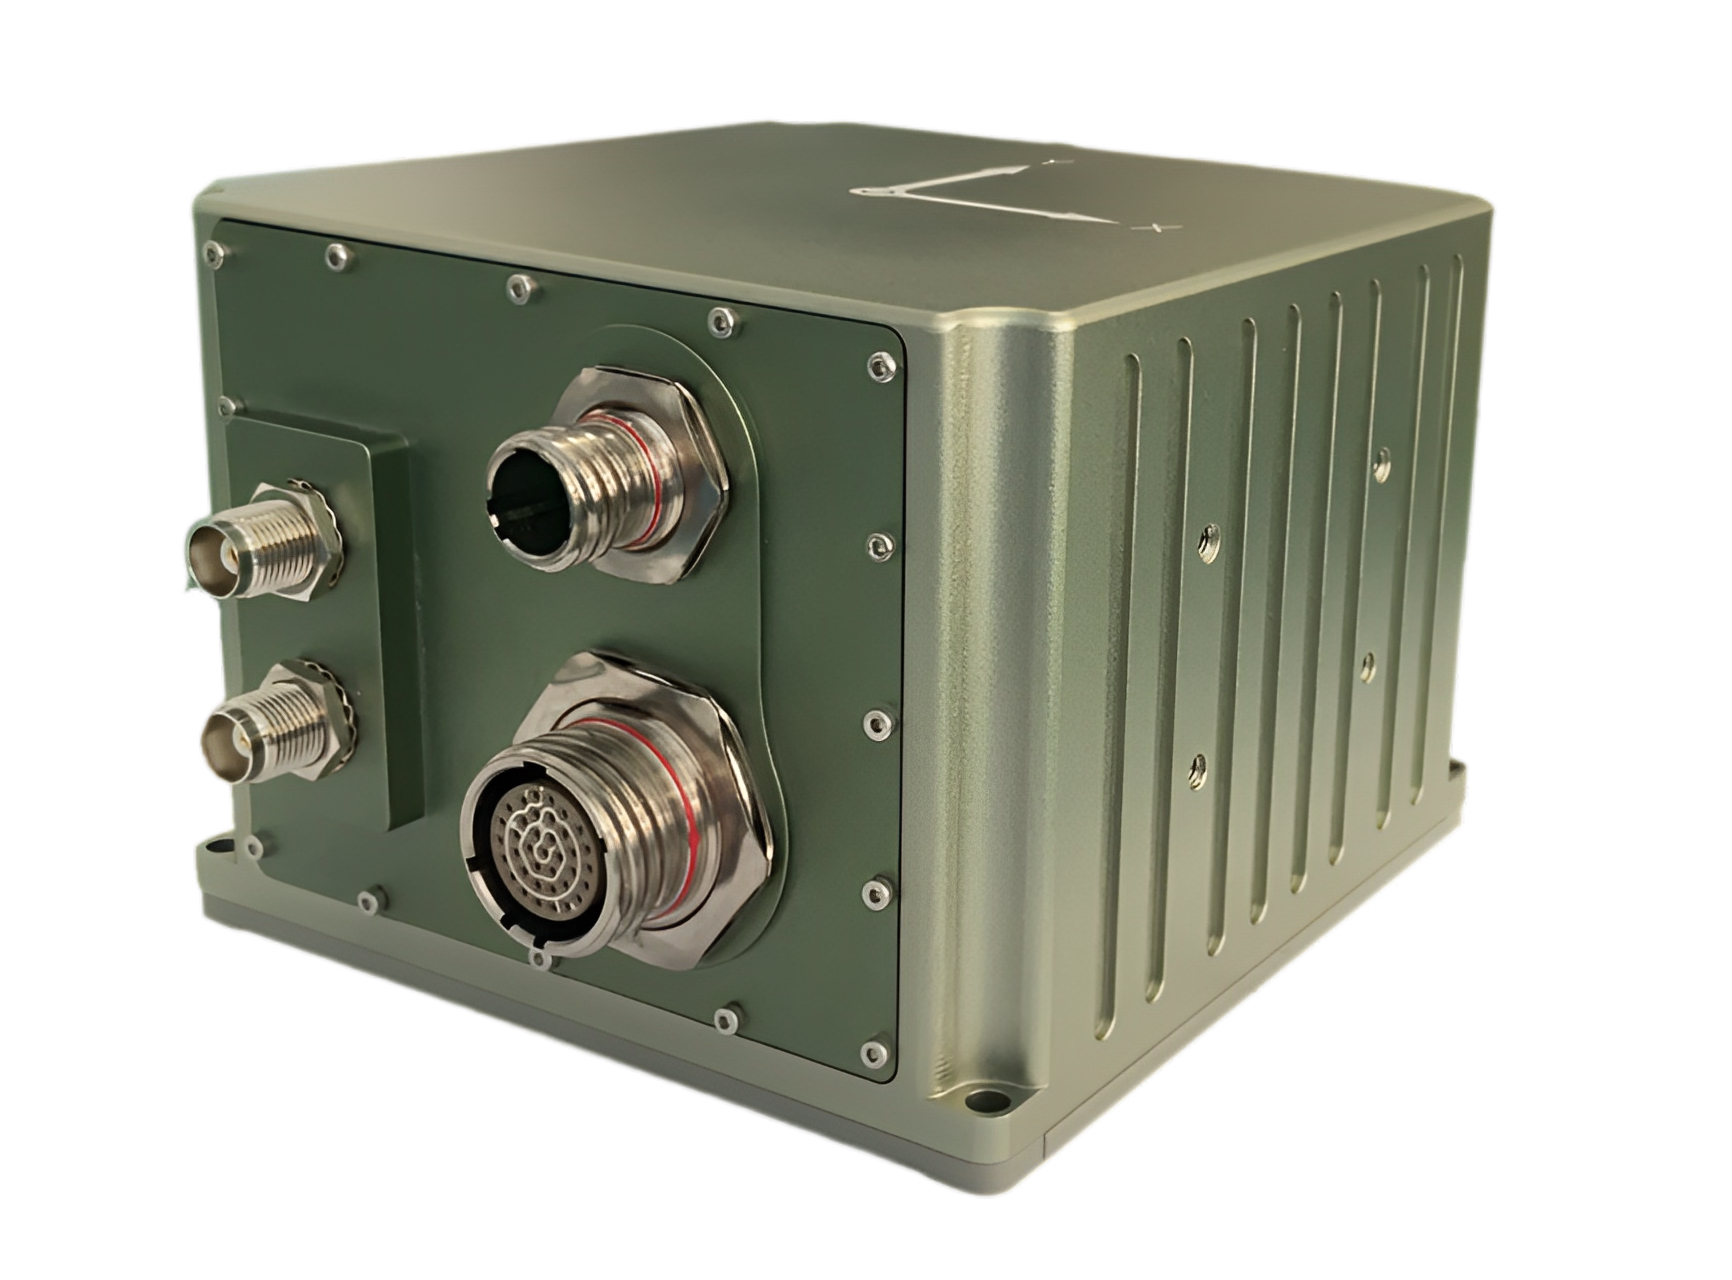 FS300-70 Нахи оптикии интегратсионӣ ба системаи навигатсионии тасвир